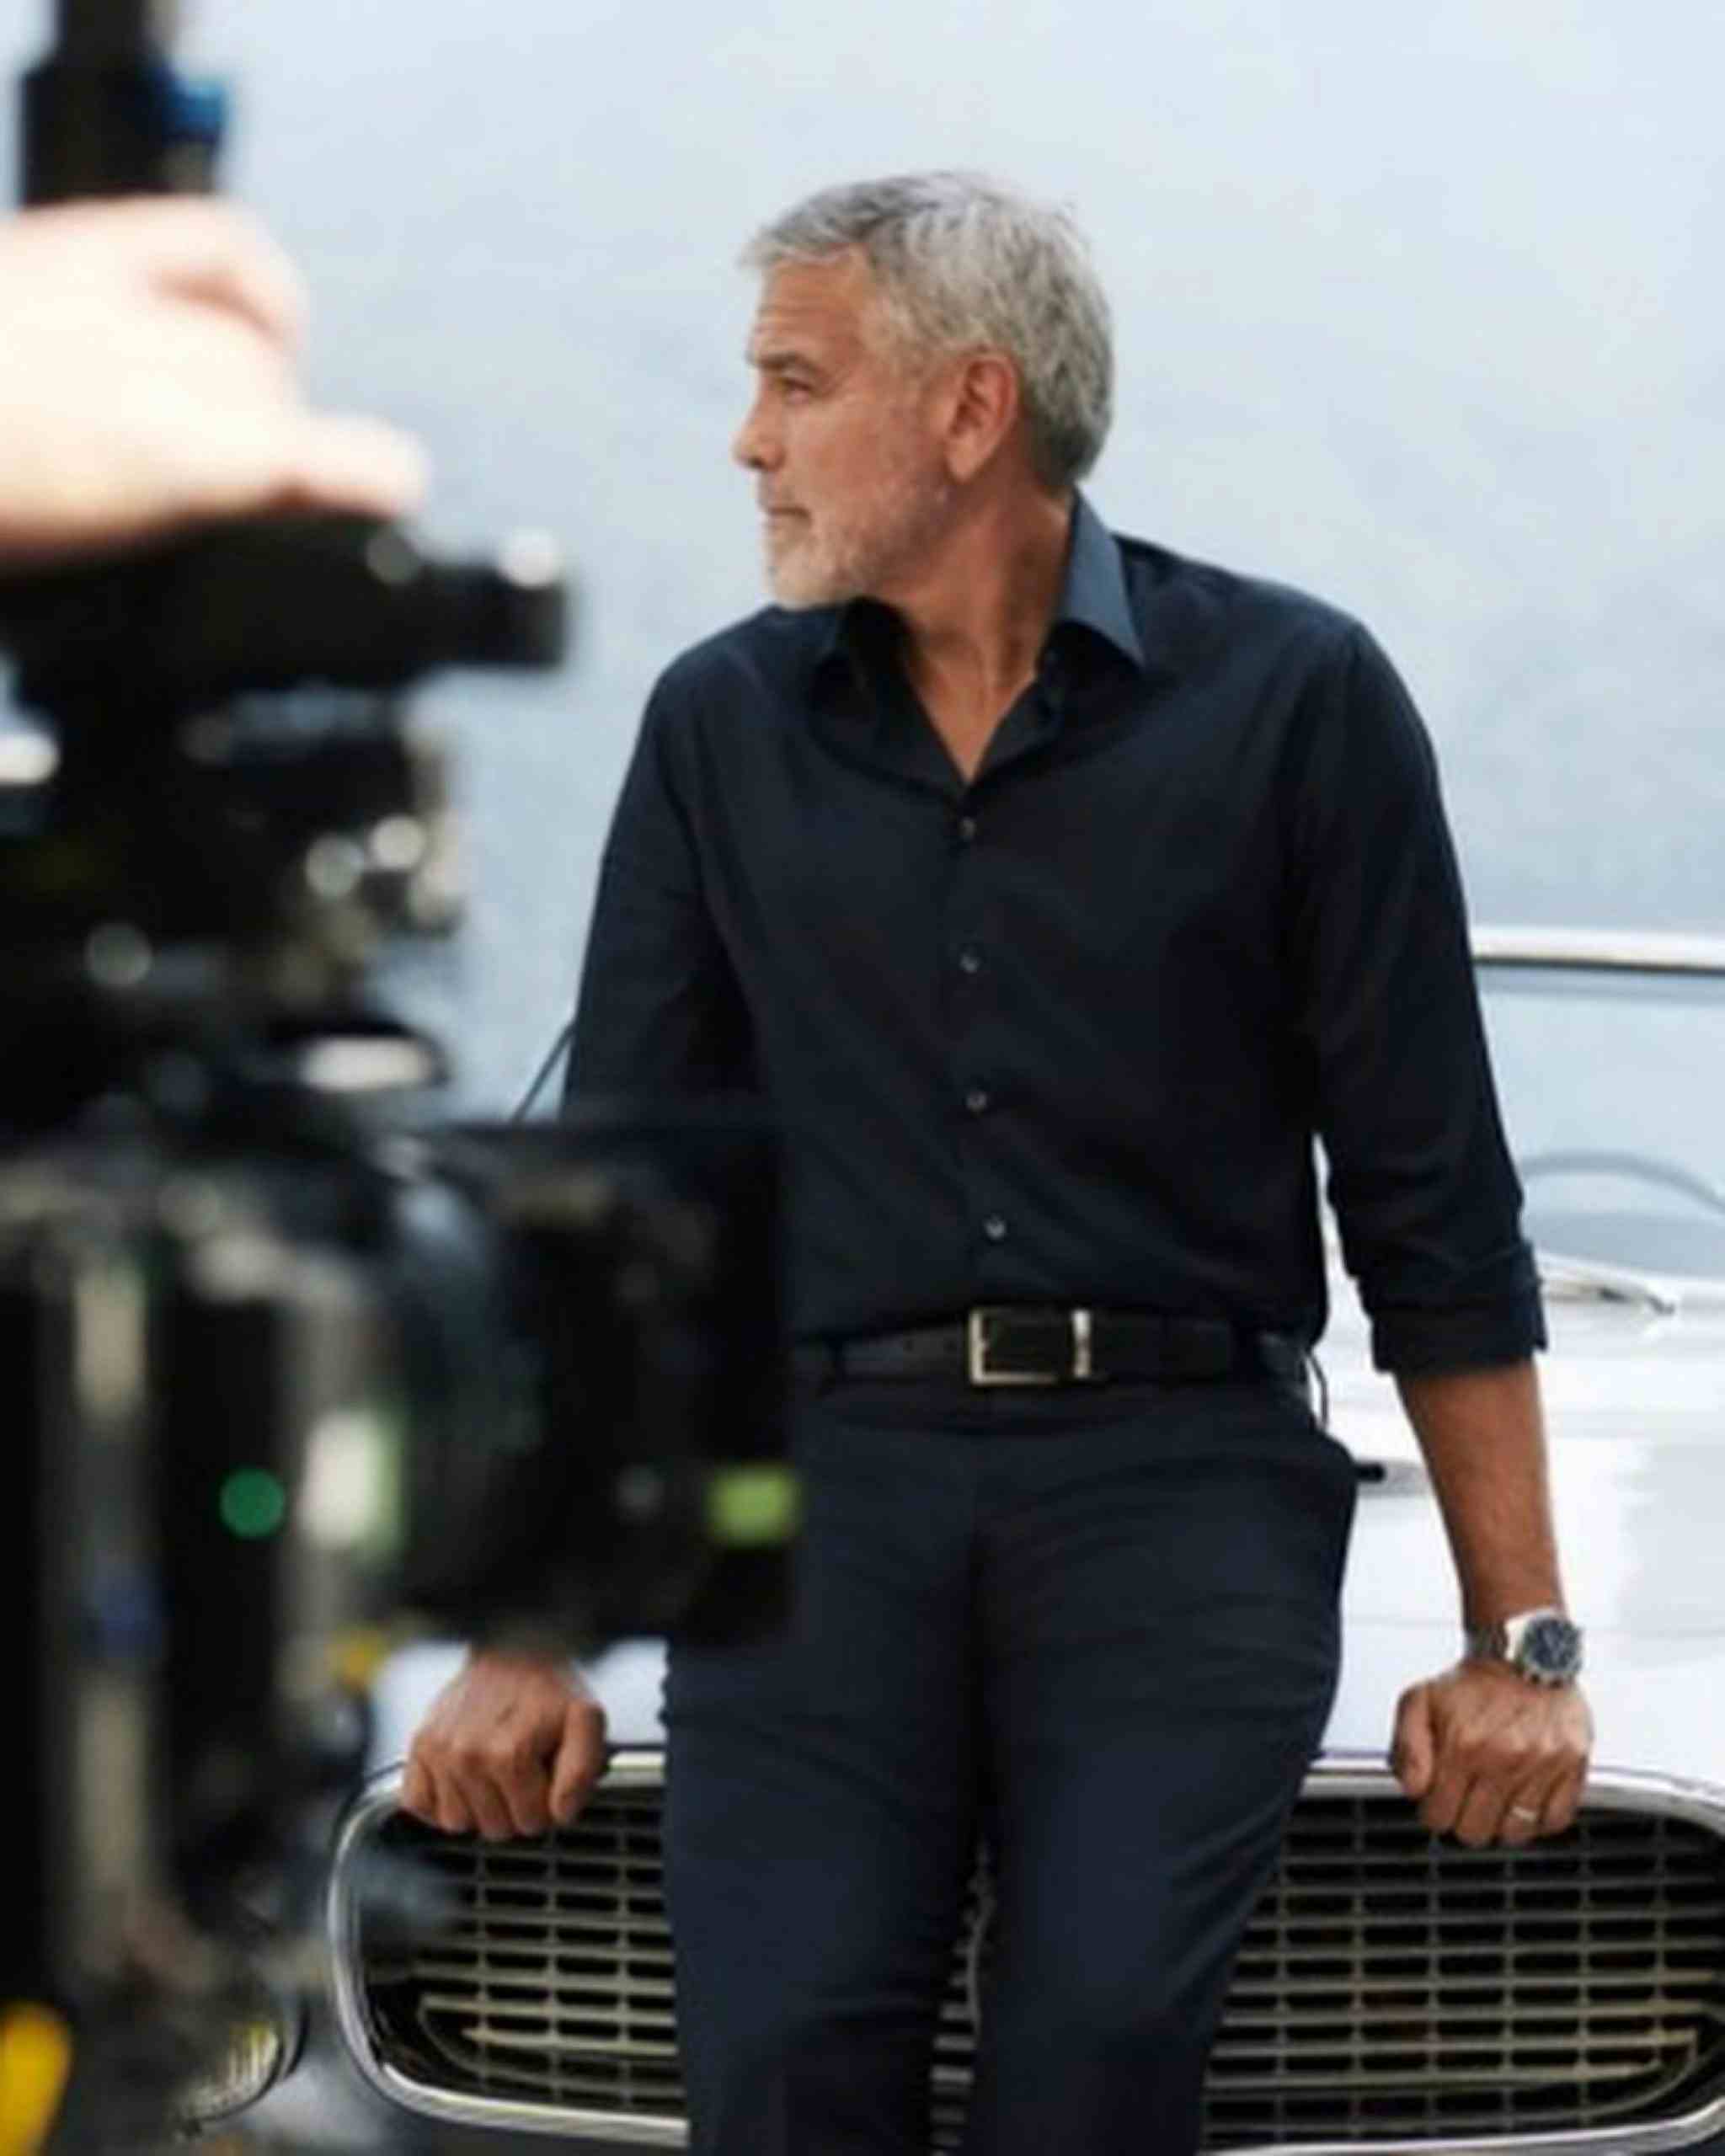 OMEGA - Speedmaster '57
Photographer: Craig McDean
Model: George Clooney
